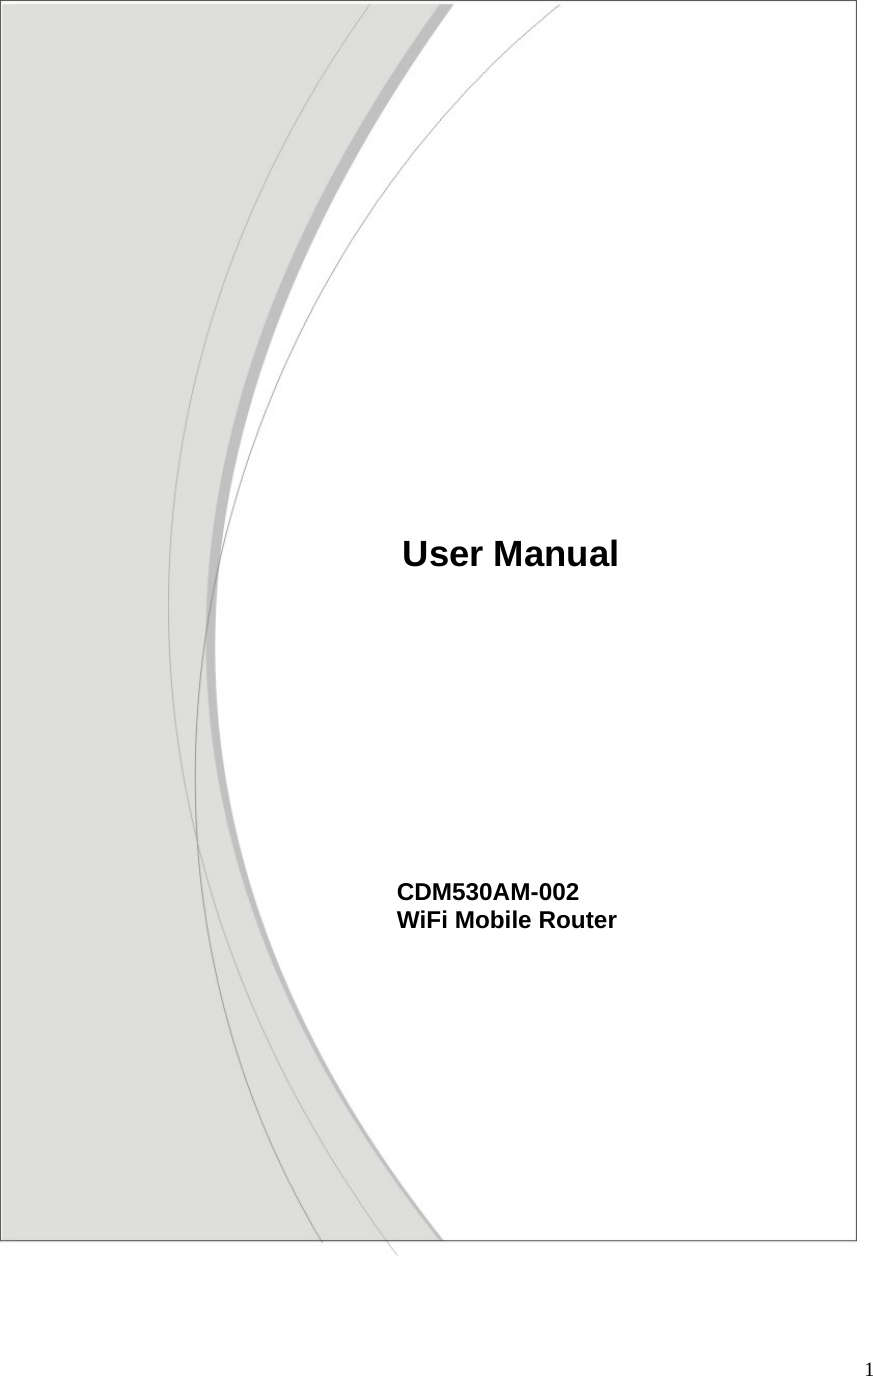  1                                                                                                   CDM530AM-002  WiFi Mobile Router              User Manual 